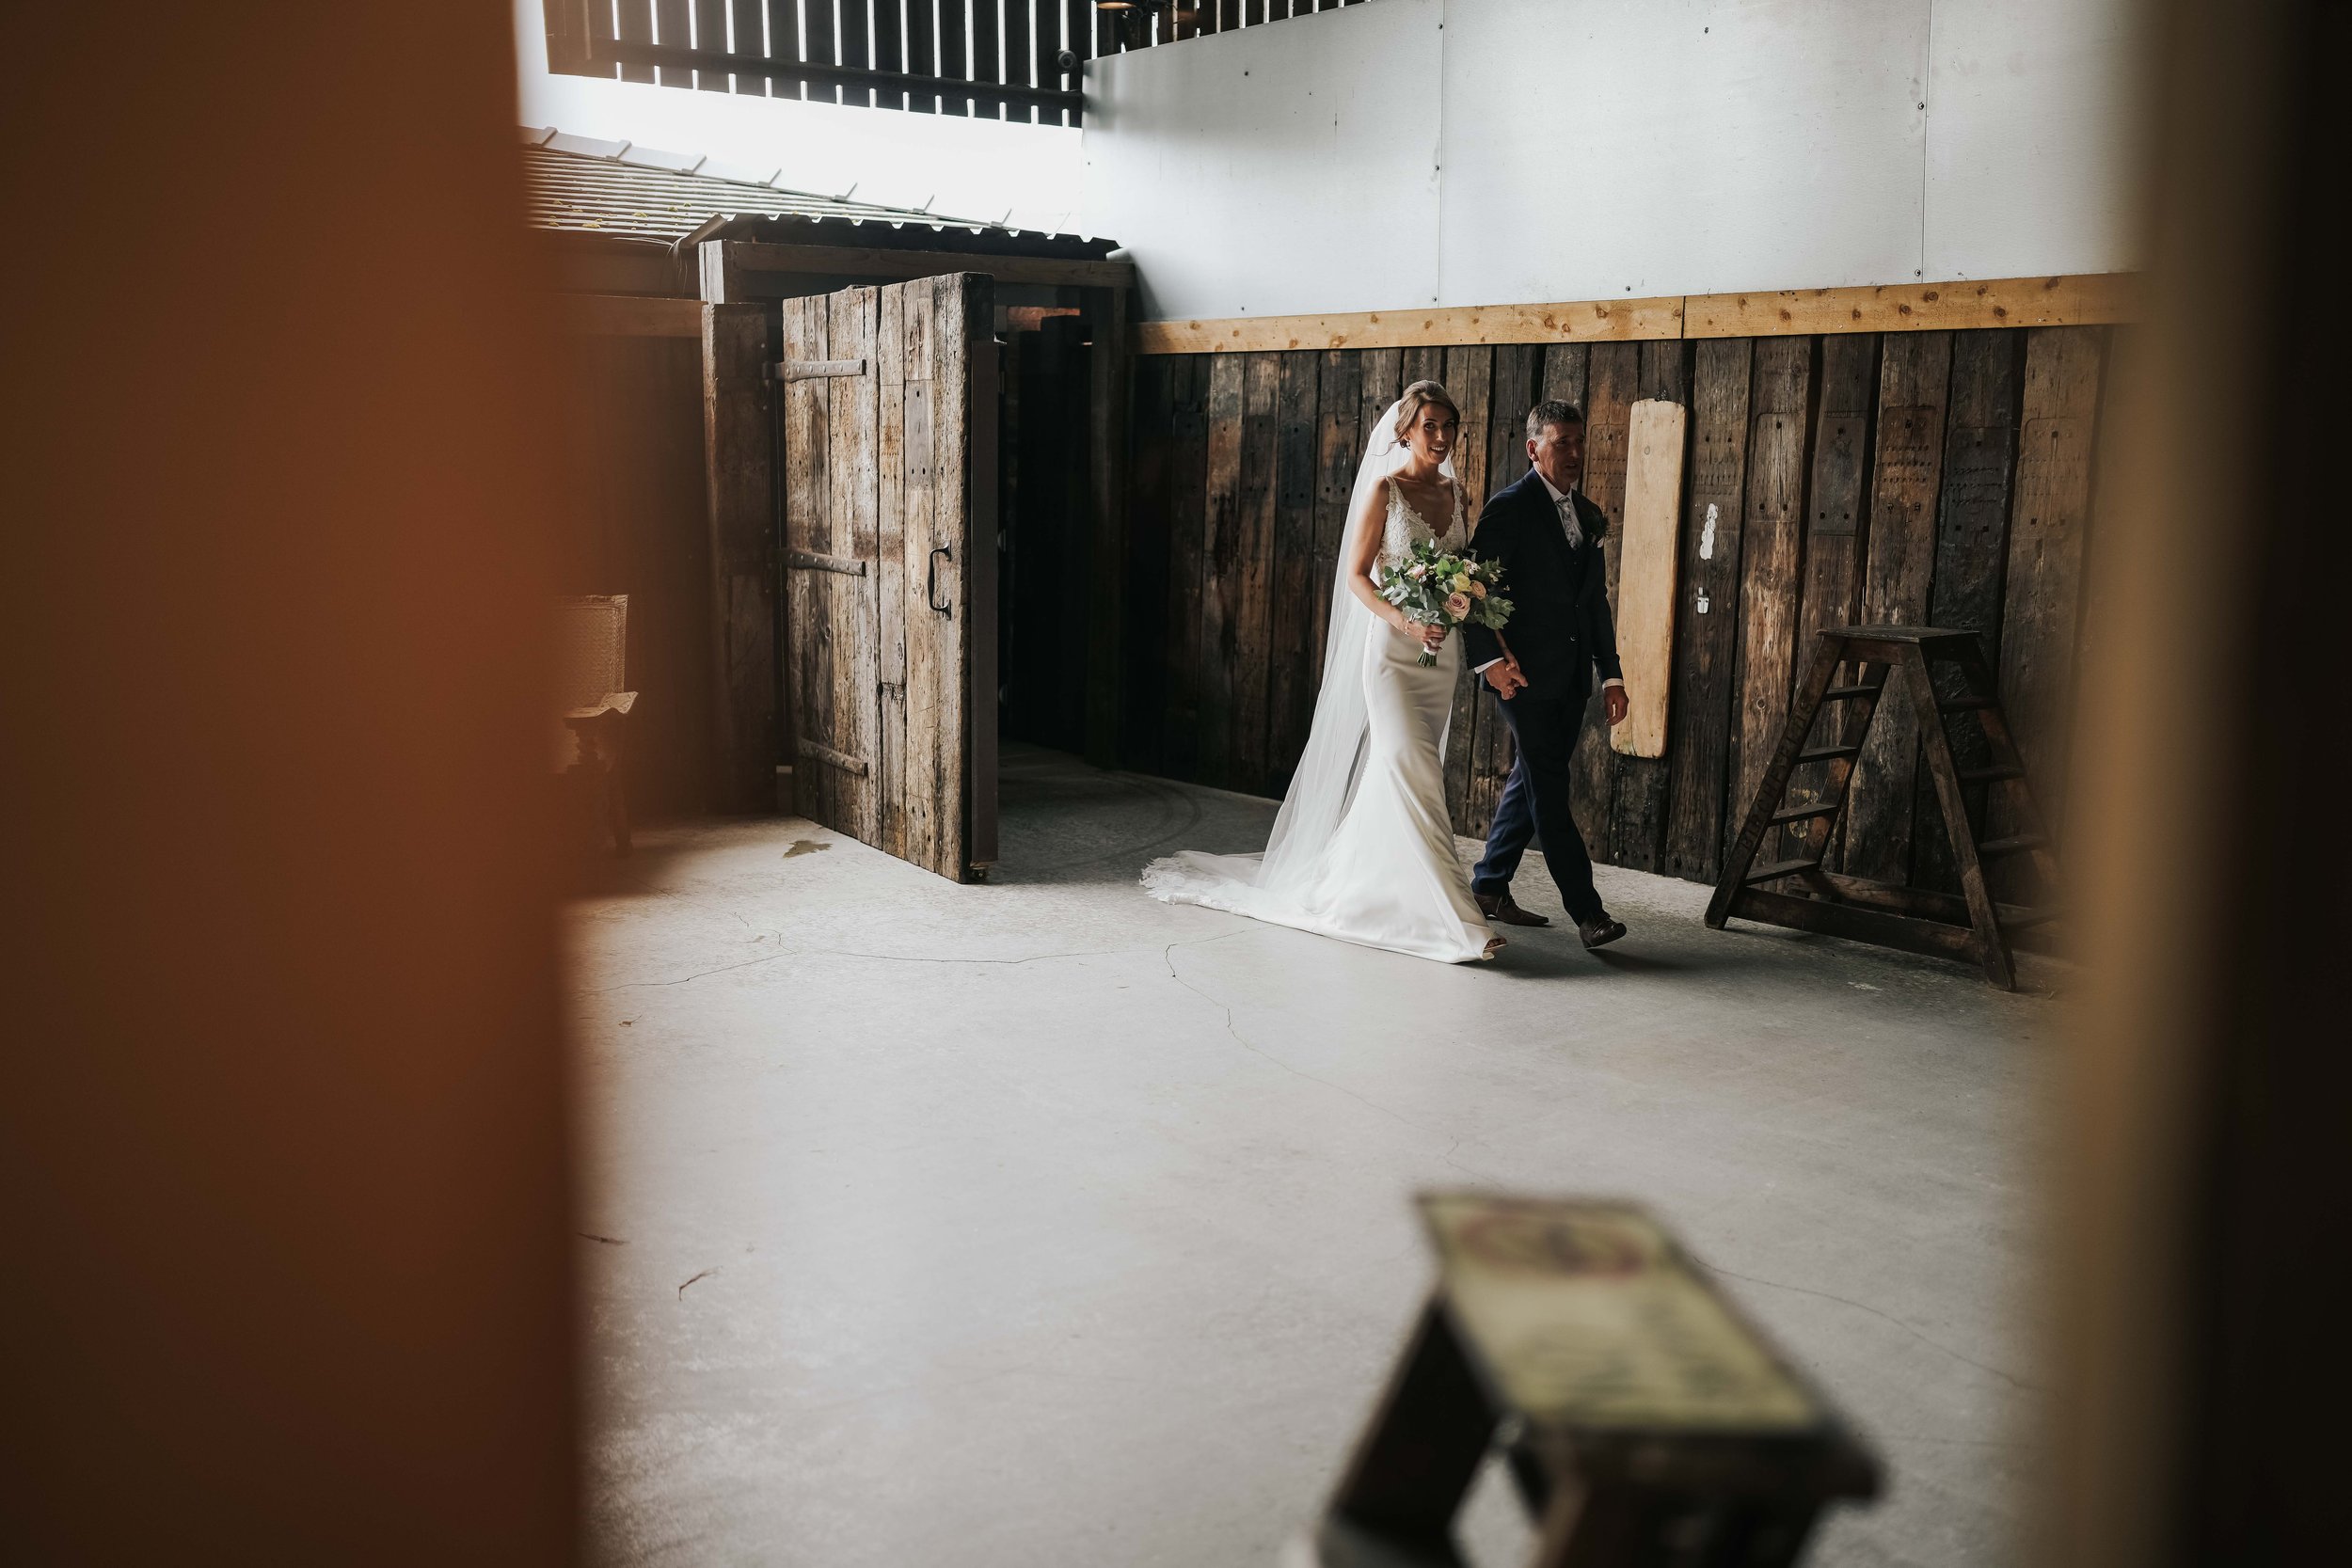 owen house wedding barn Photography cheshire Photographer- 018.jpg